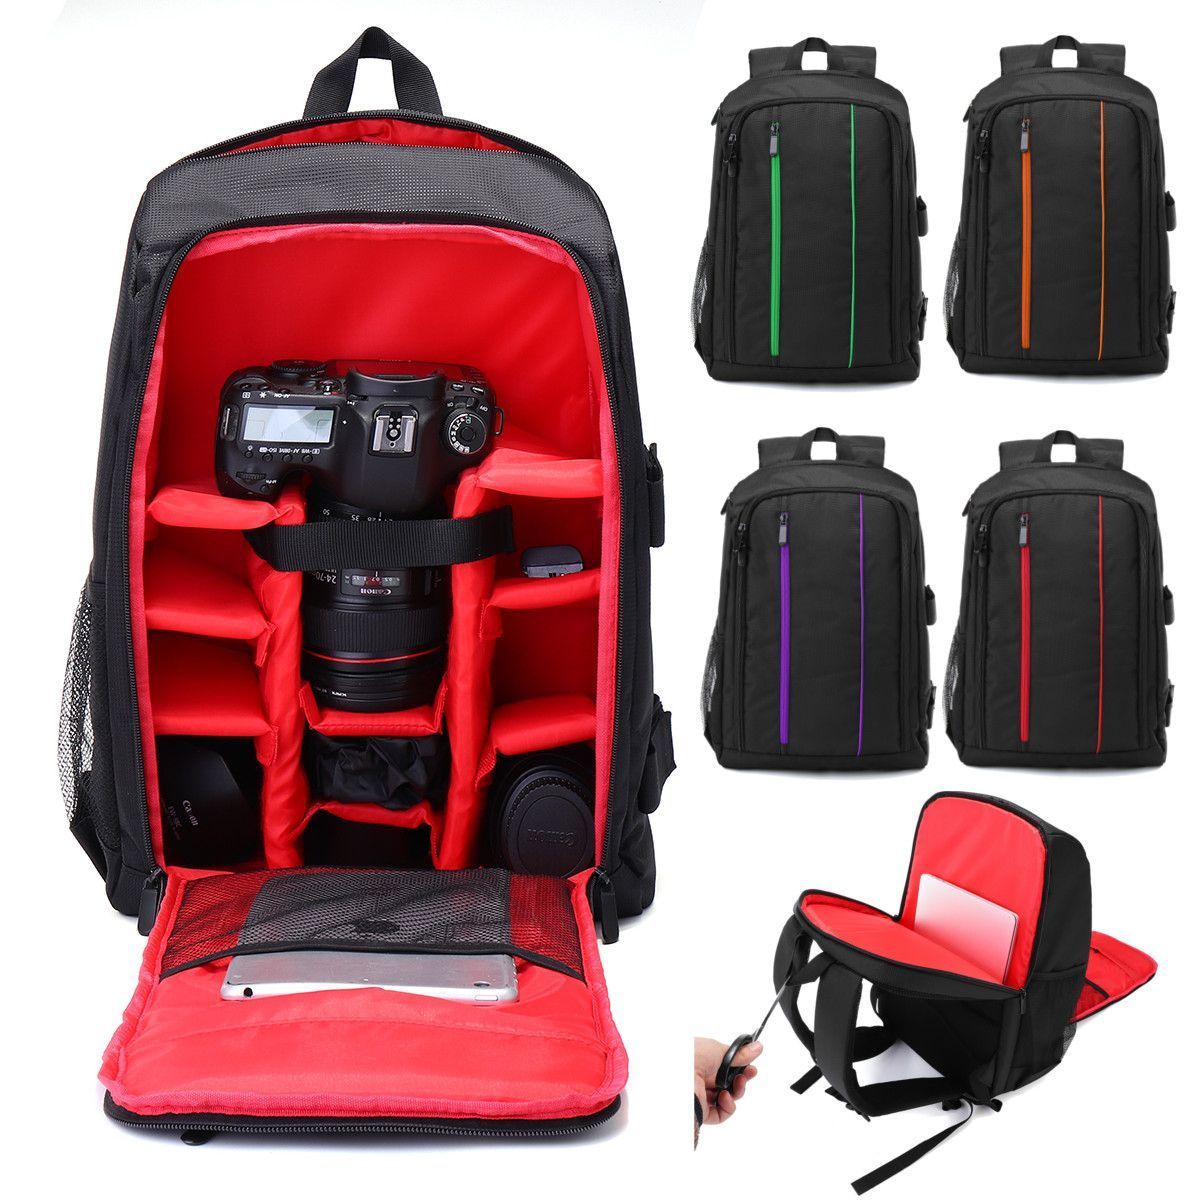 16-Inch-Nylon-Waterproof-Large-Outdoor-Camera-Bag-Shockproof-Digital-DSLR-Bag-Camera-Backpack-for-Ni-1675619